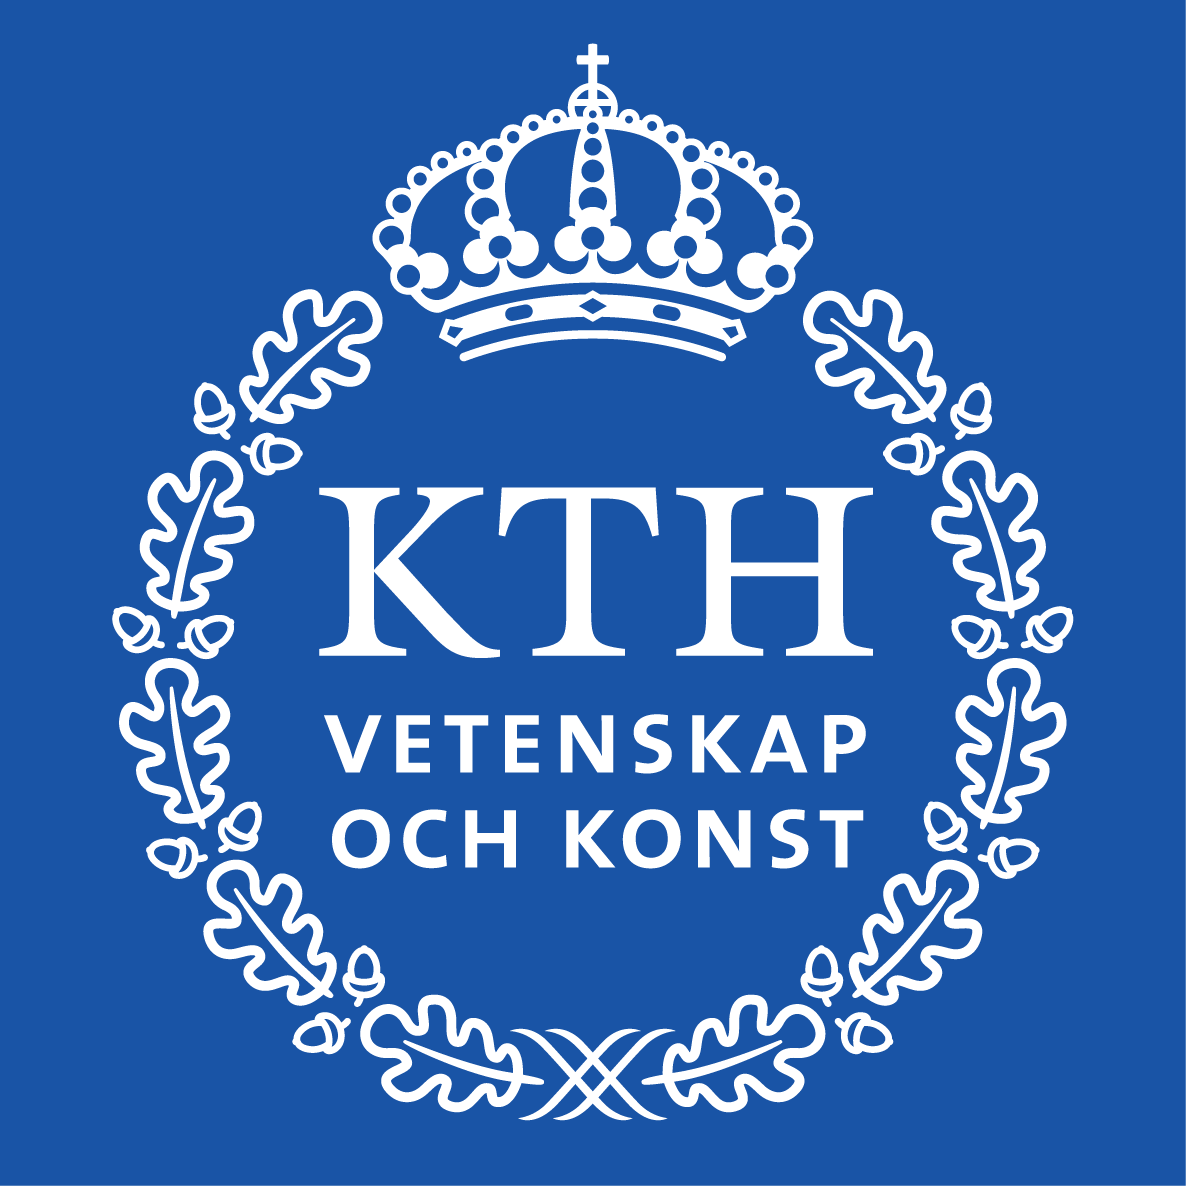 Royal Institute of Technology (KTH) , Sweden